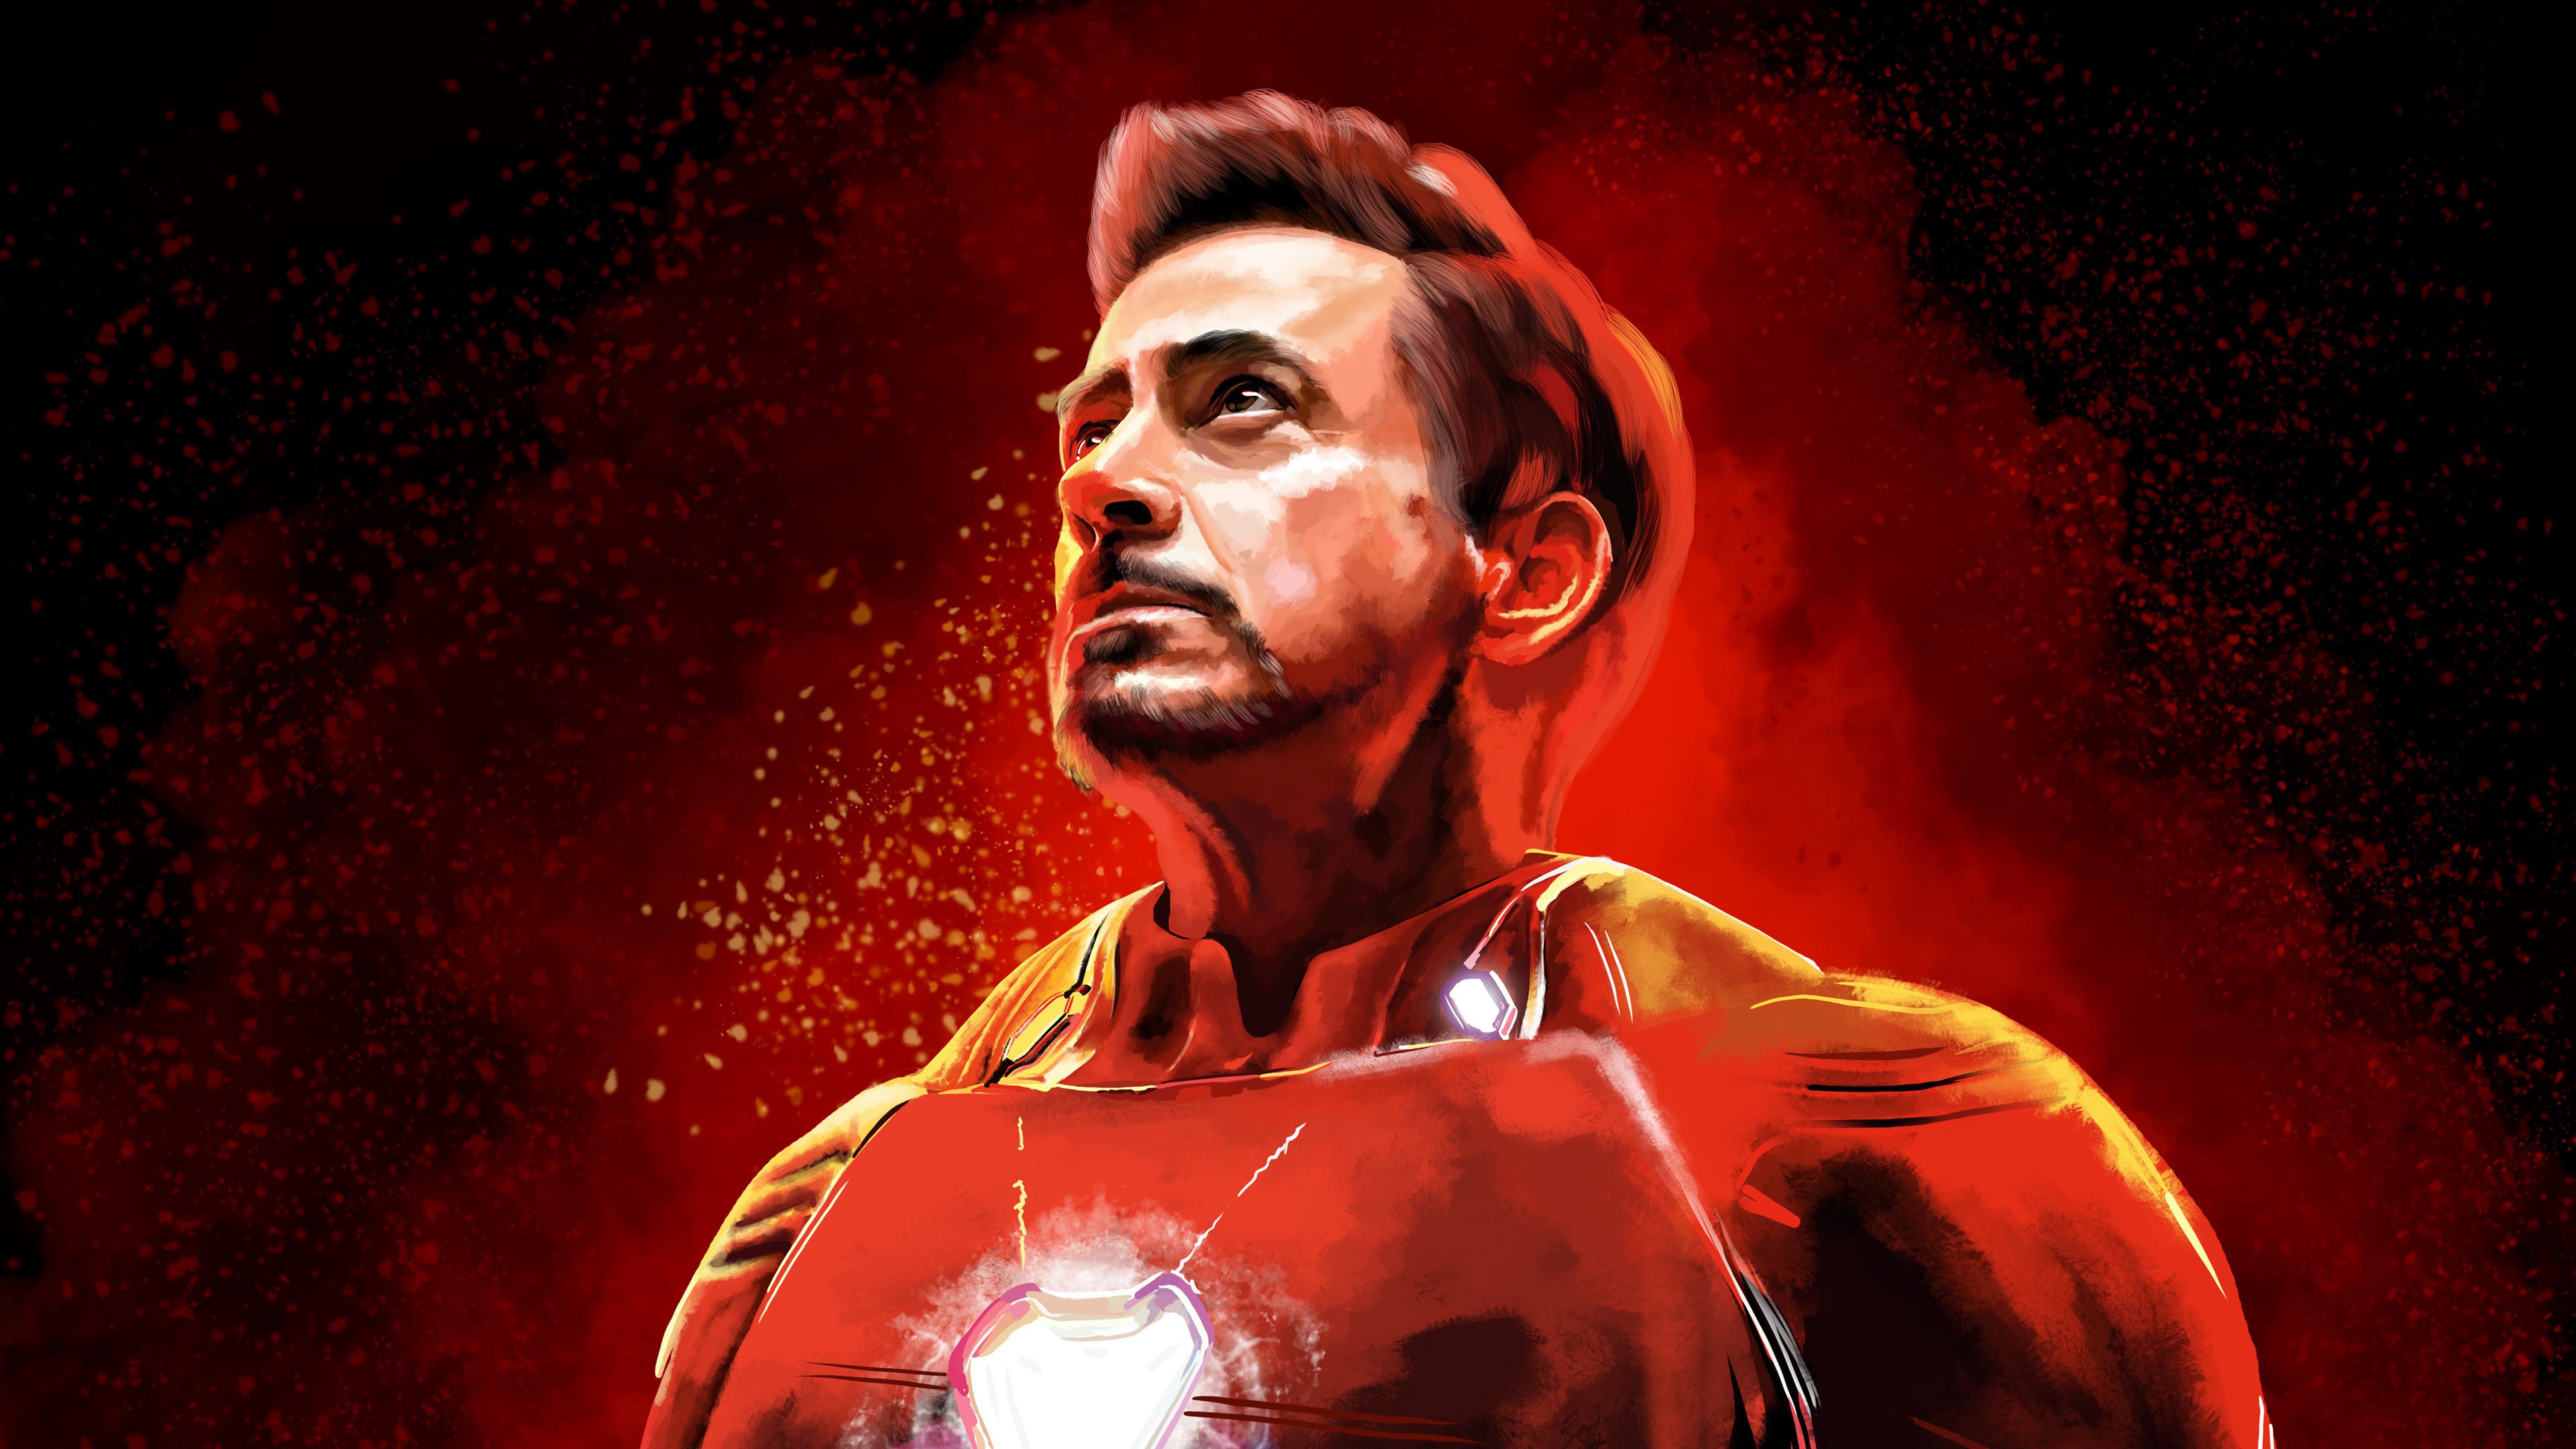 Fondos de pantalla Robert Downey Jr como Iron Man Fanart